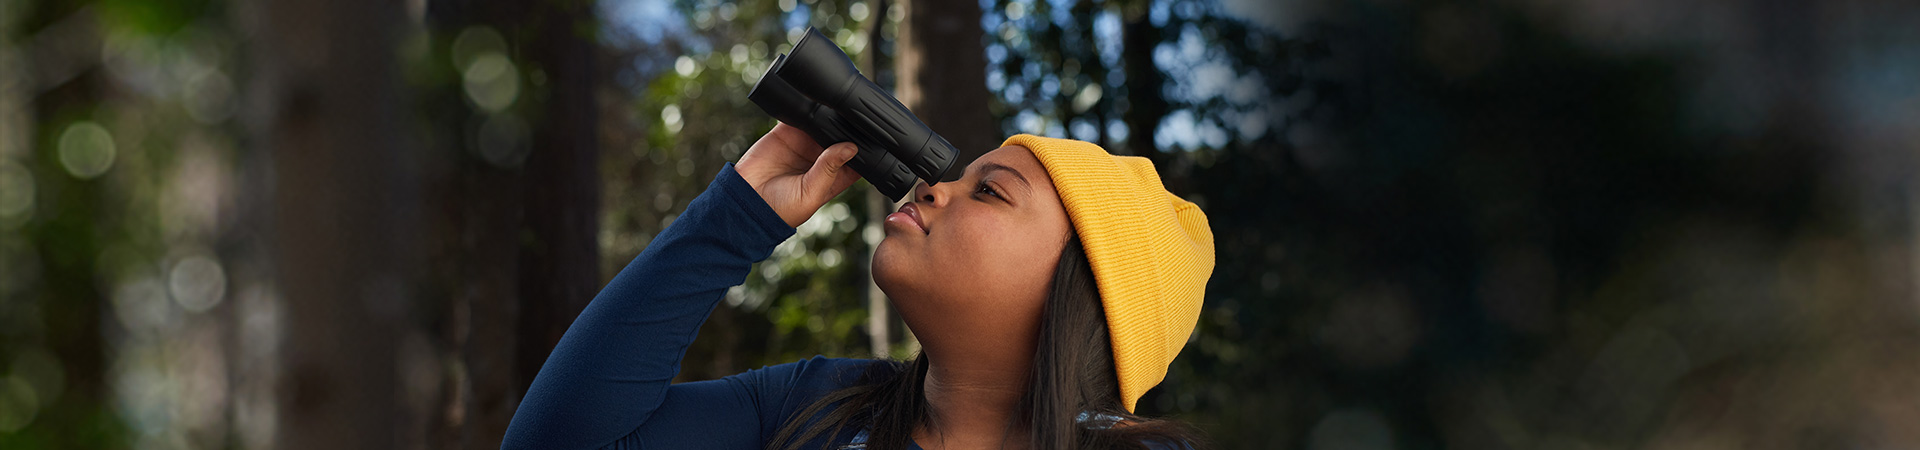  high school girl holding binoculars outside in woods 